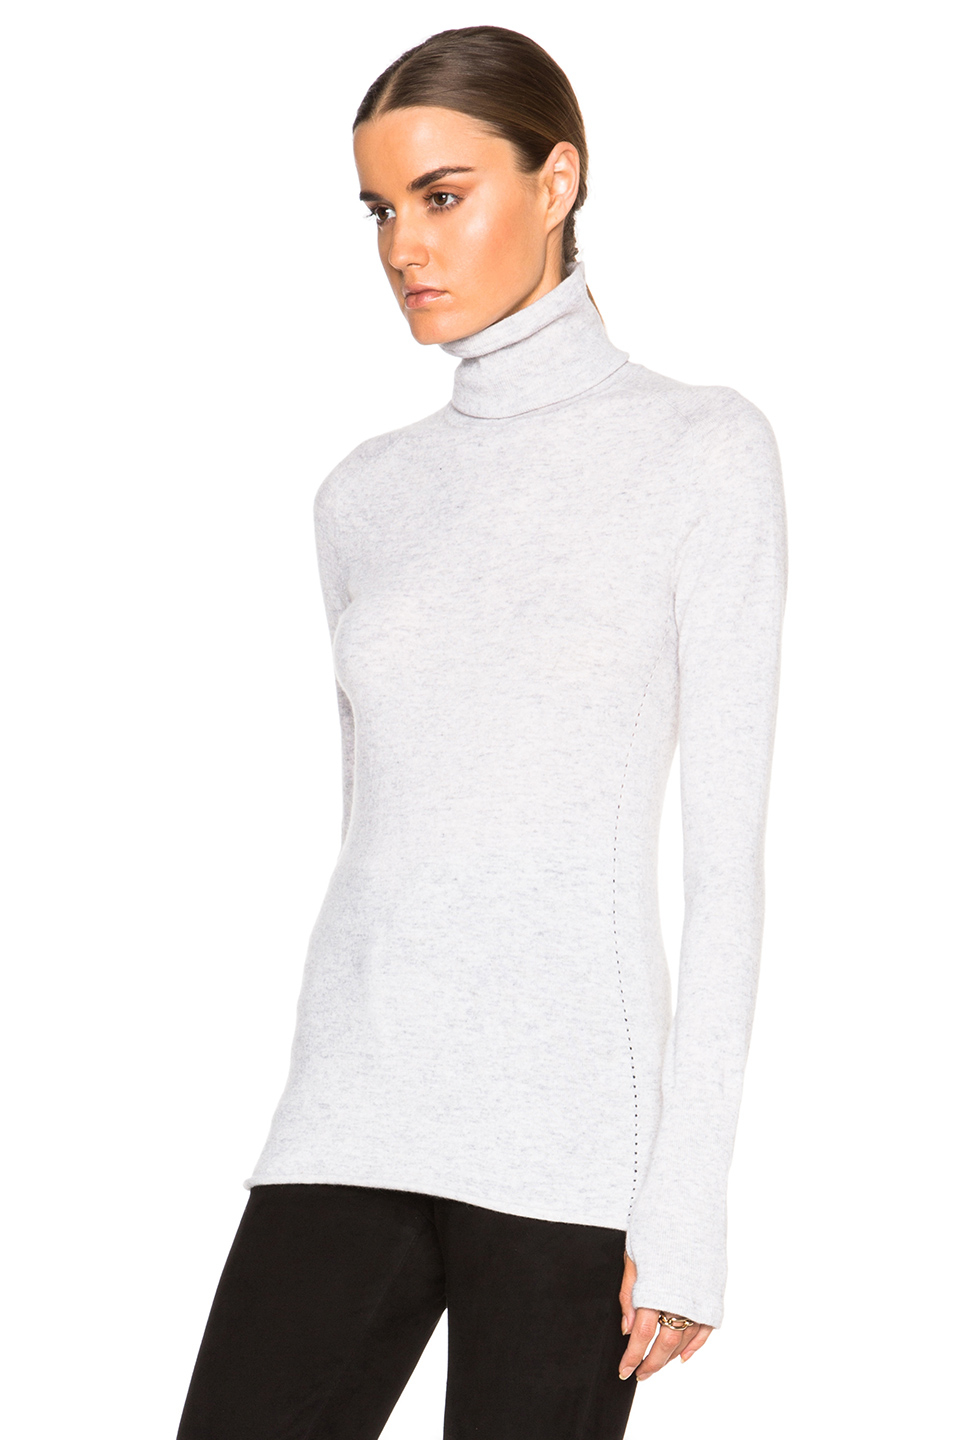 Lyst - Inhabit Cashmere Thumbhole Turtleneck Sweater in White